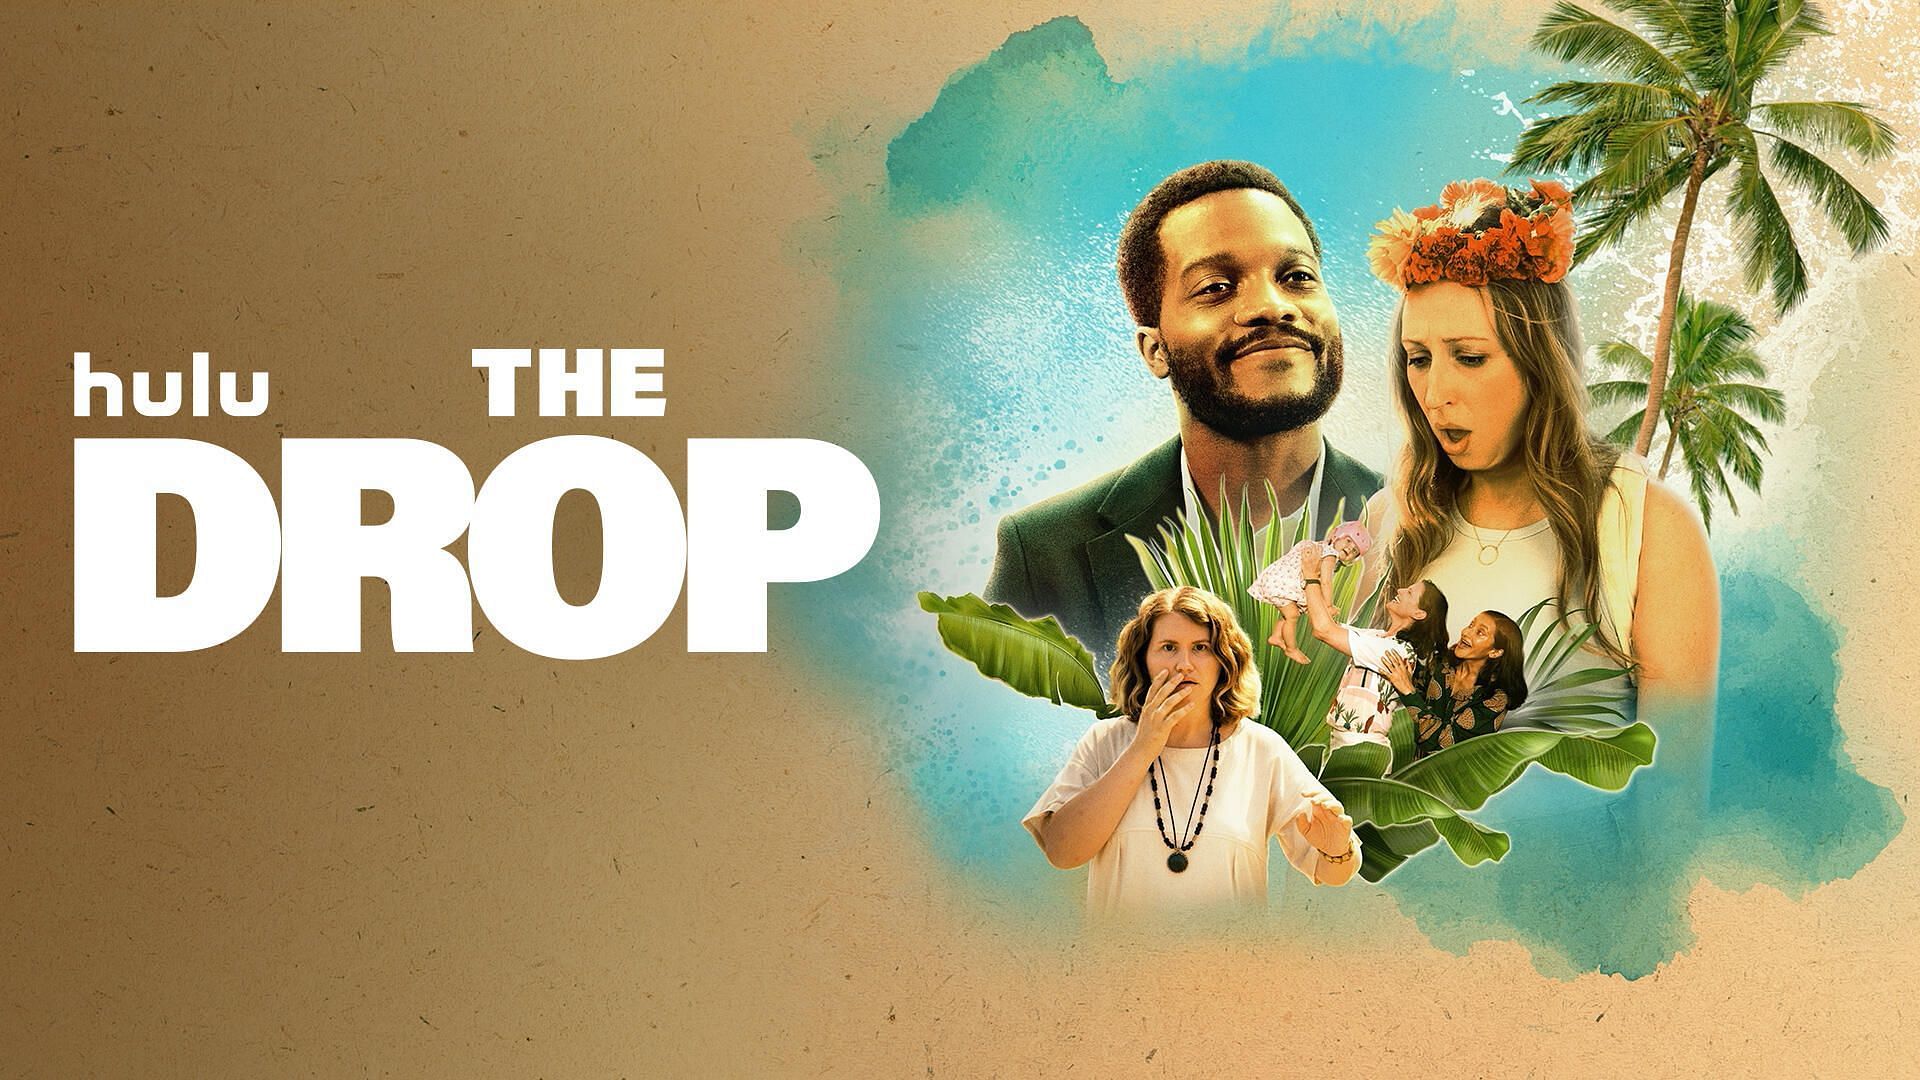 The Drop (Image via Hulu)